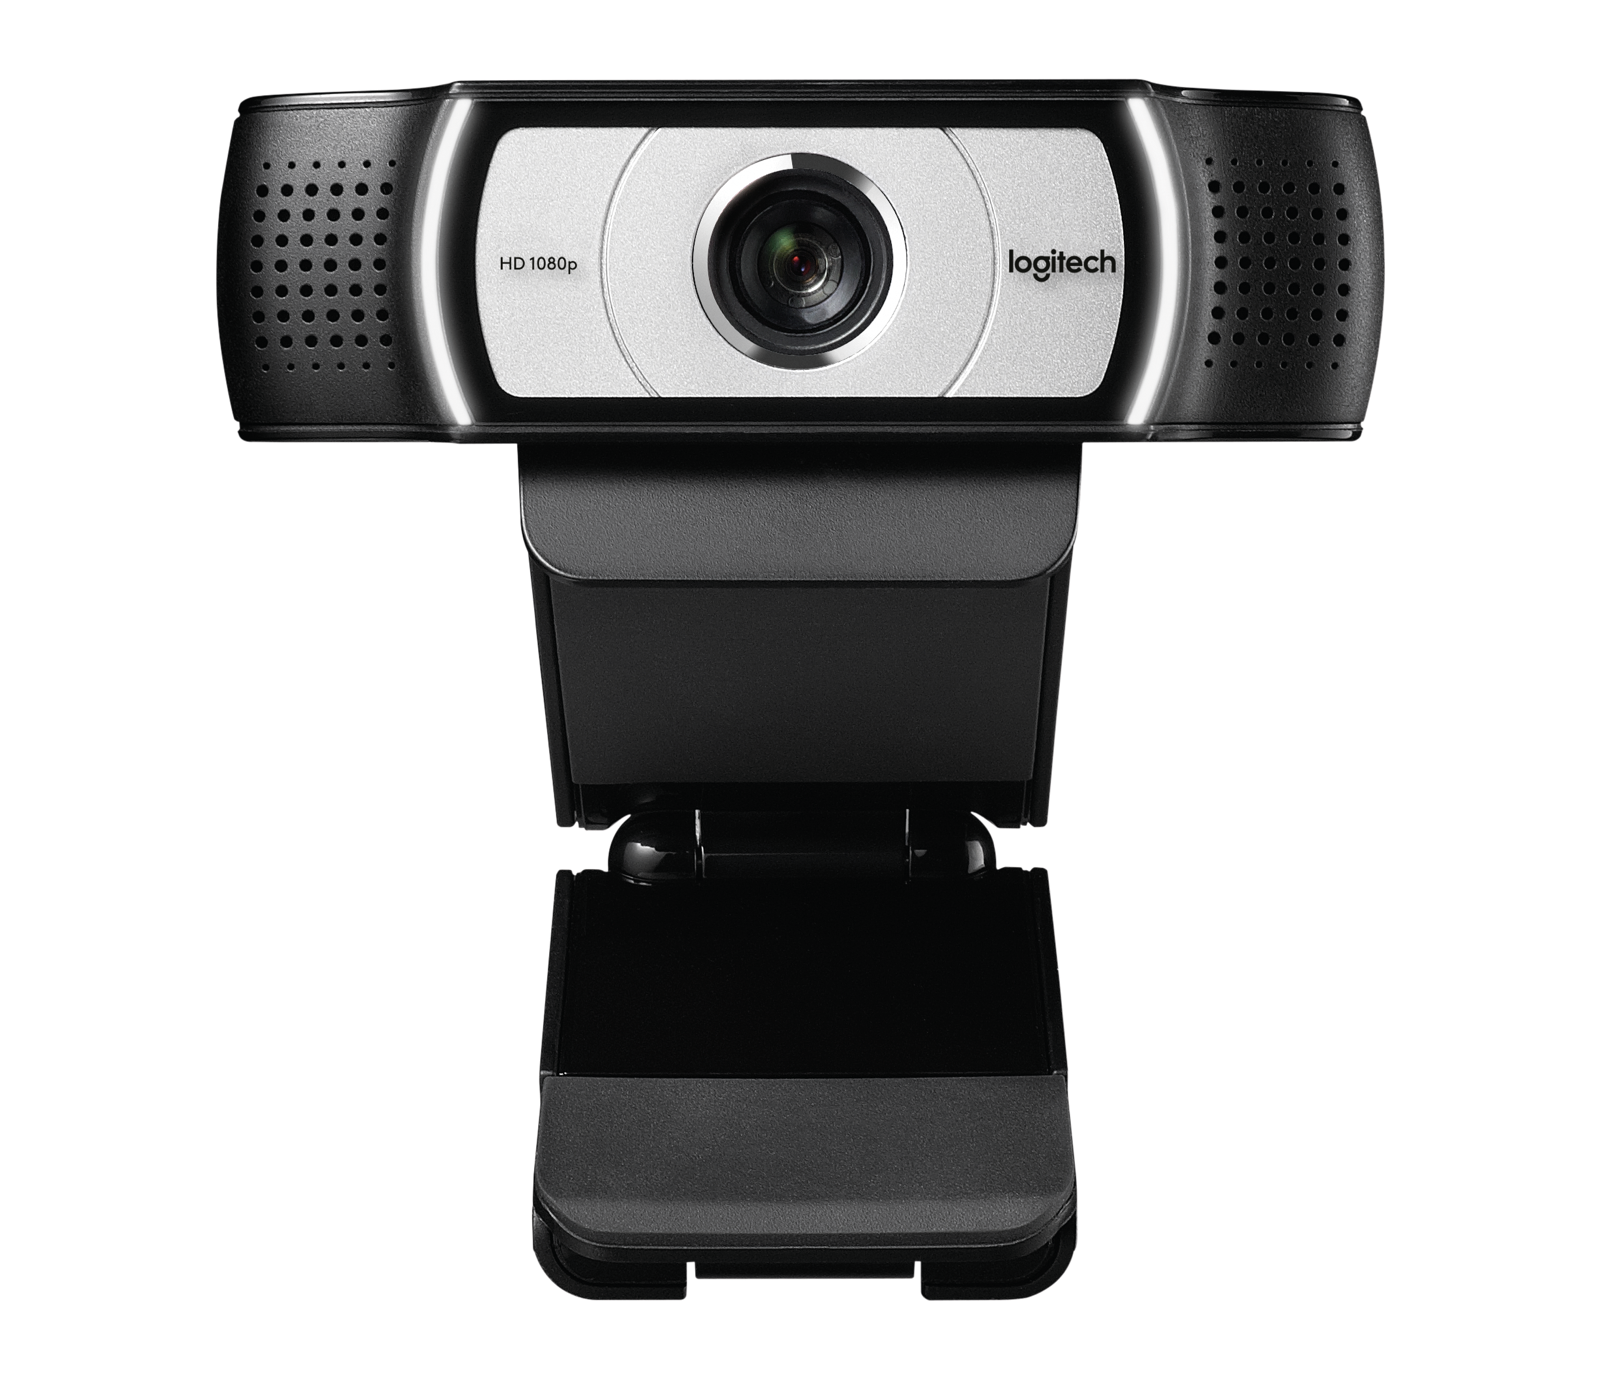 zweep Excentriek Installatie Logitech C930e 1080p Business Webcam with Wide Angle Lens